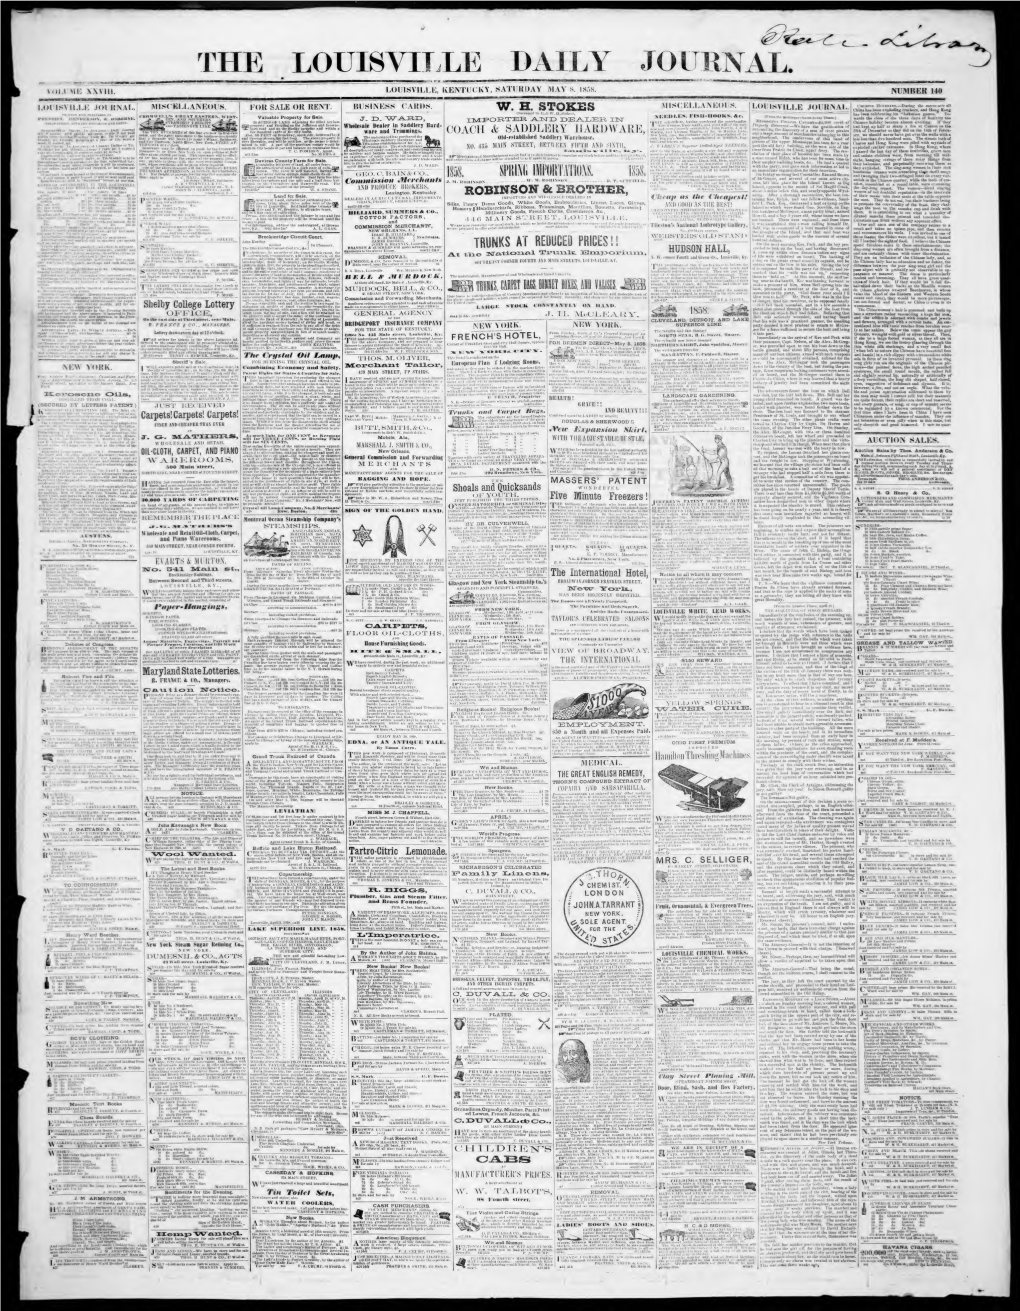 Louisville Daily Journal (Louisville, Ky. : 1833): 1858-05-08